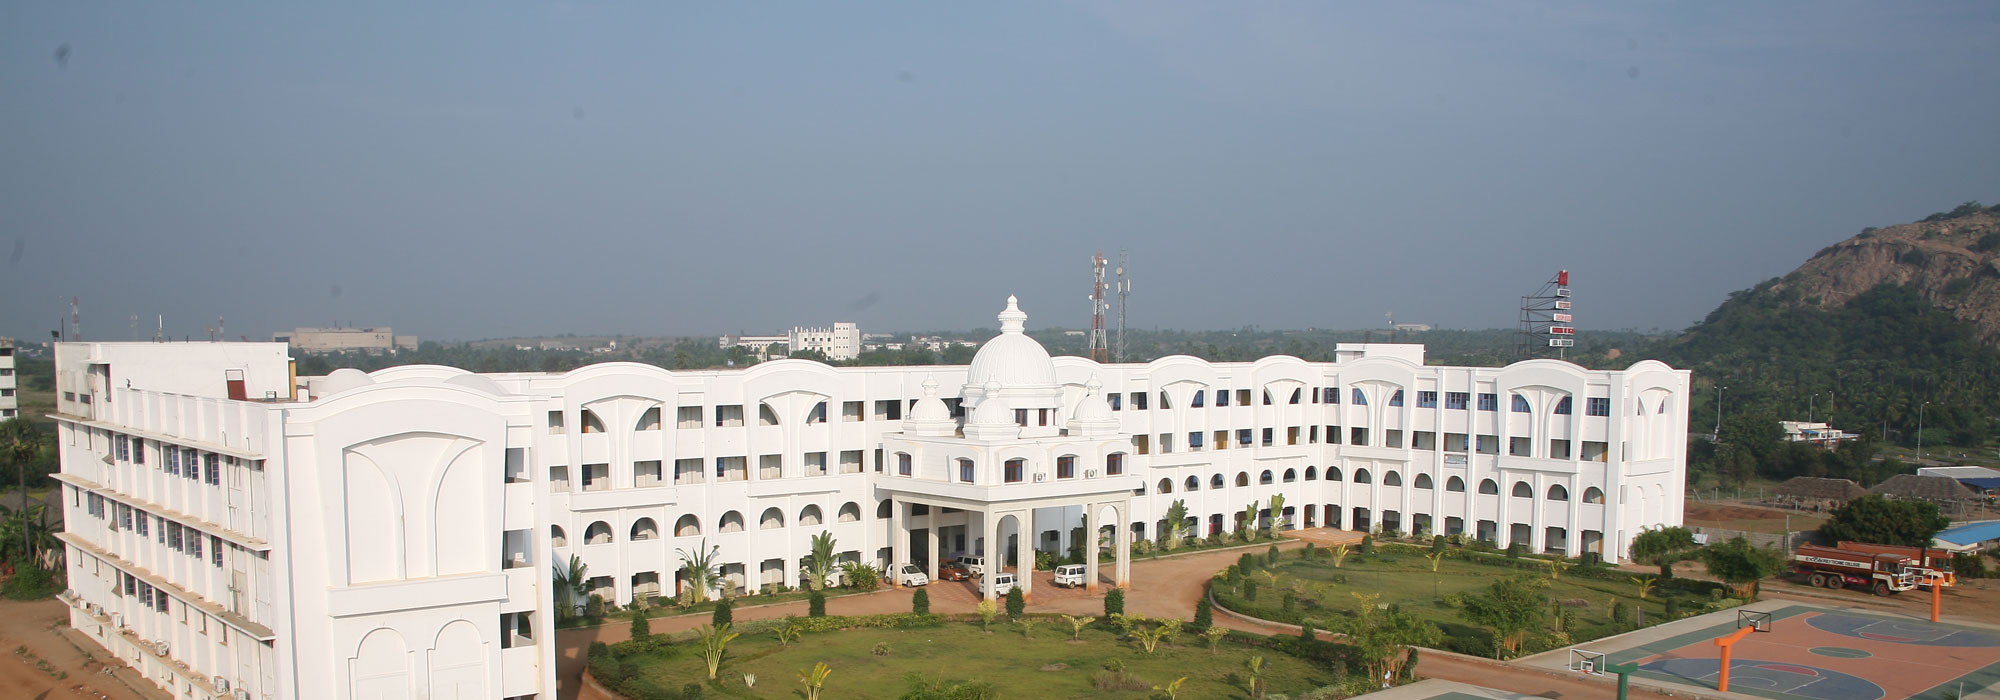 Excel Engineering College, Namakkal Image